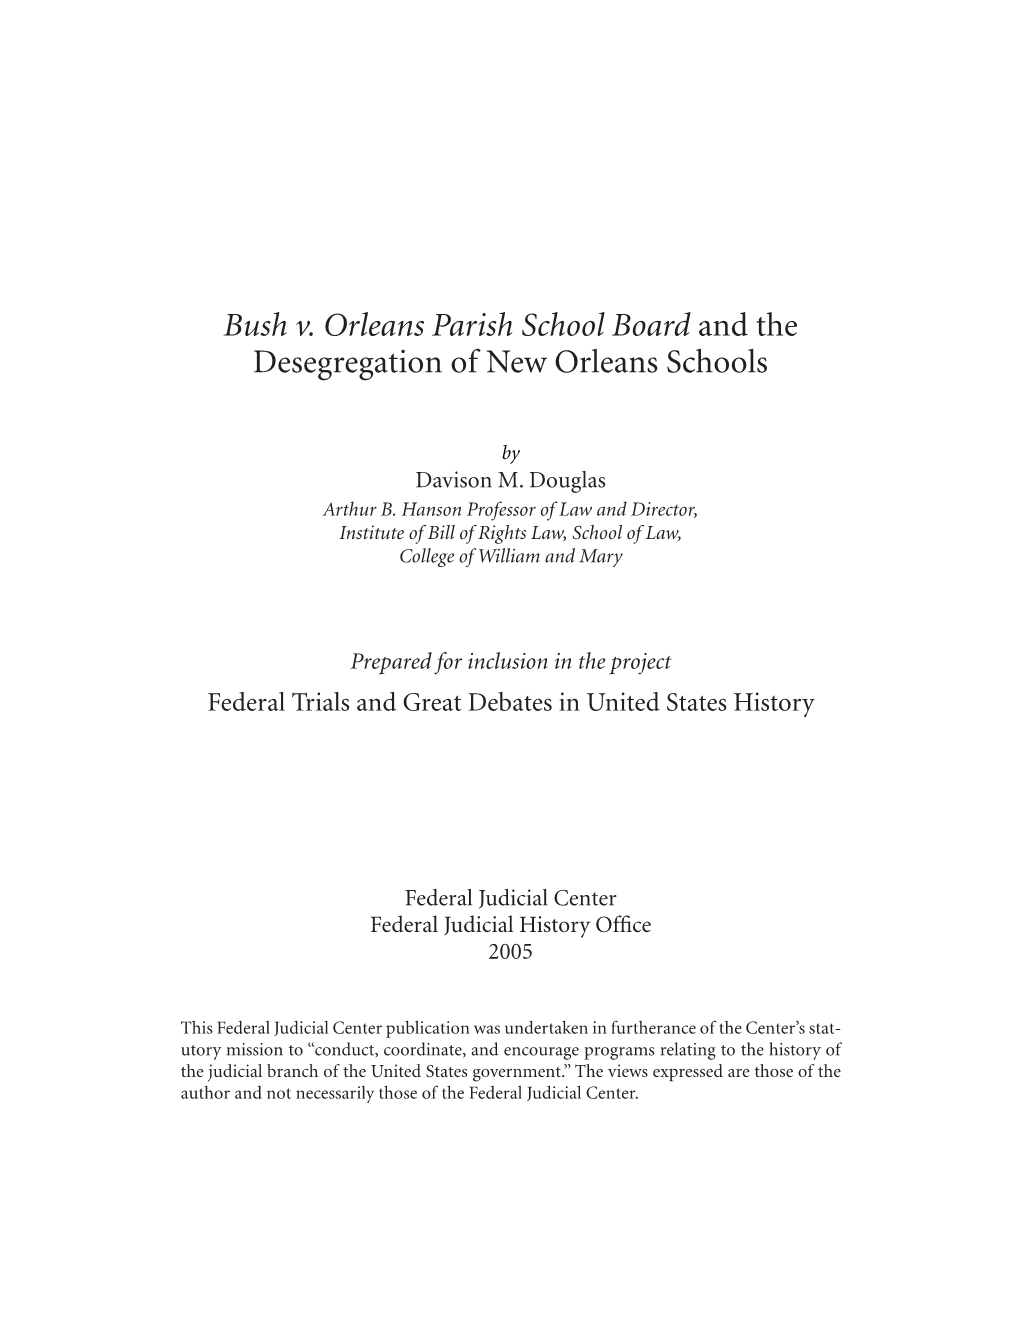 Bush V. Orleans Parish School Board and the Desegregation of New Orleans Schools